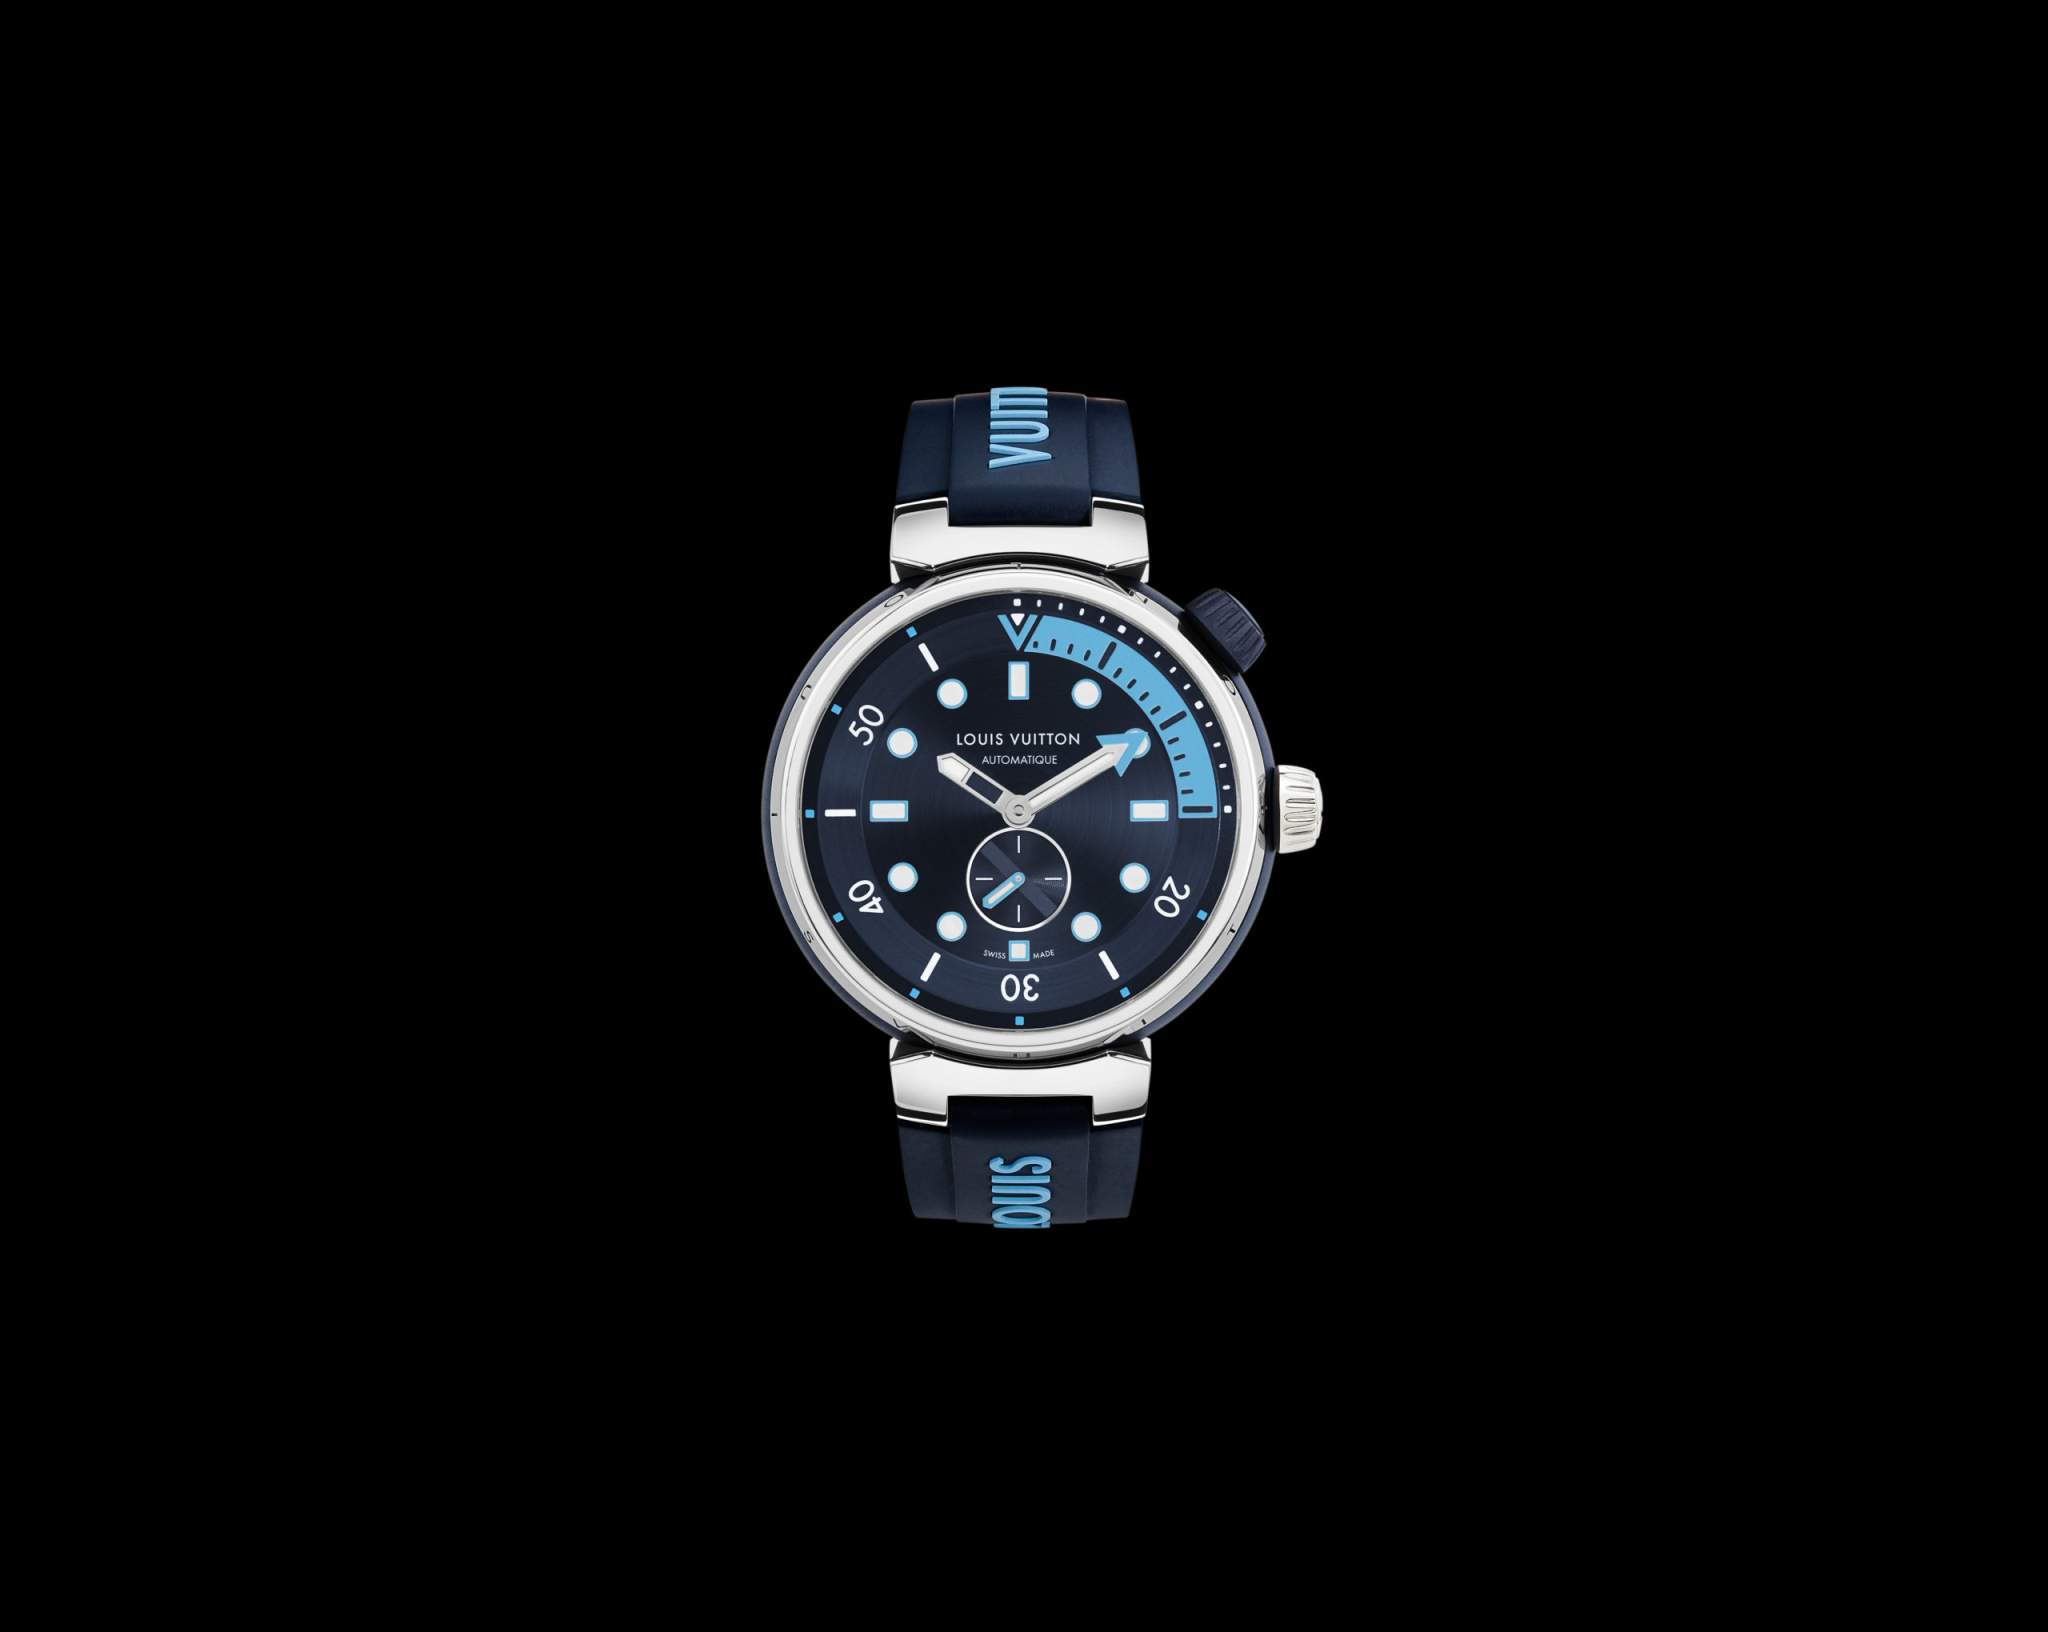 Louis Vuitton, Tambour Street Diver Skyline Blue, winning watch of the Diver’s Watch Prize 2021